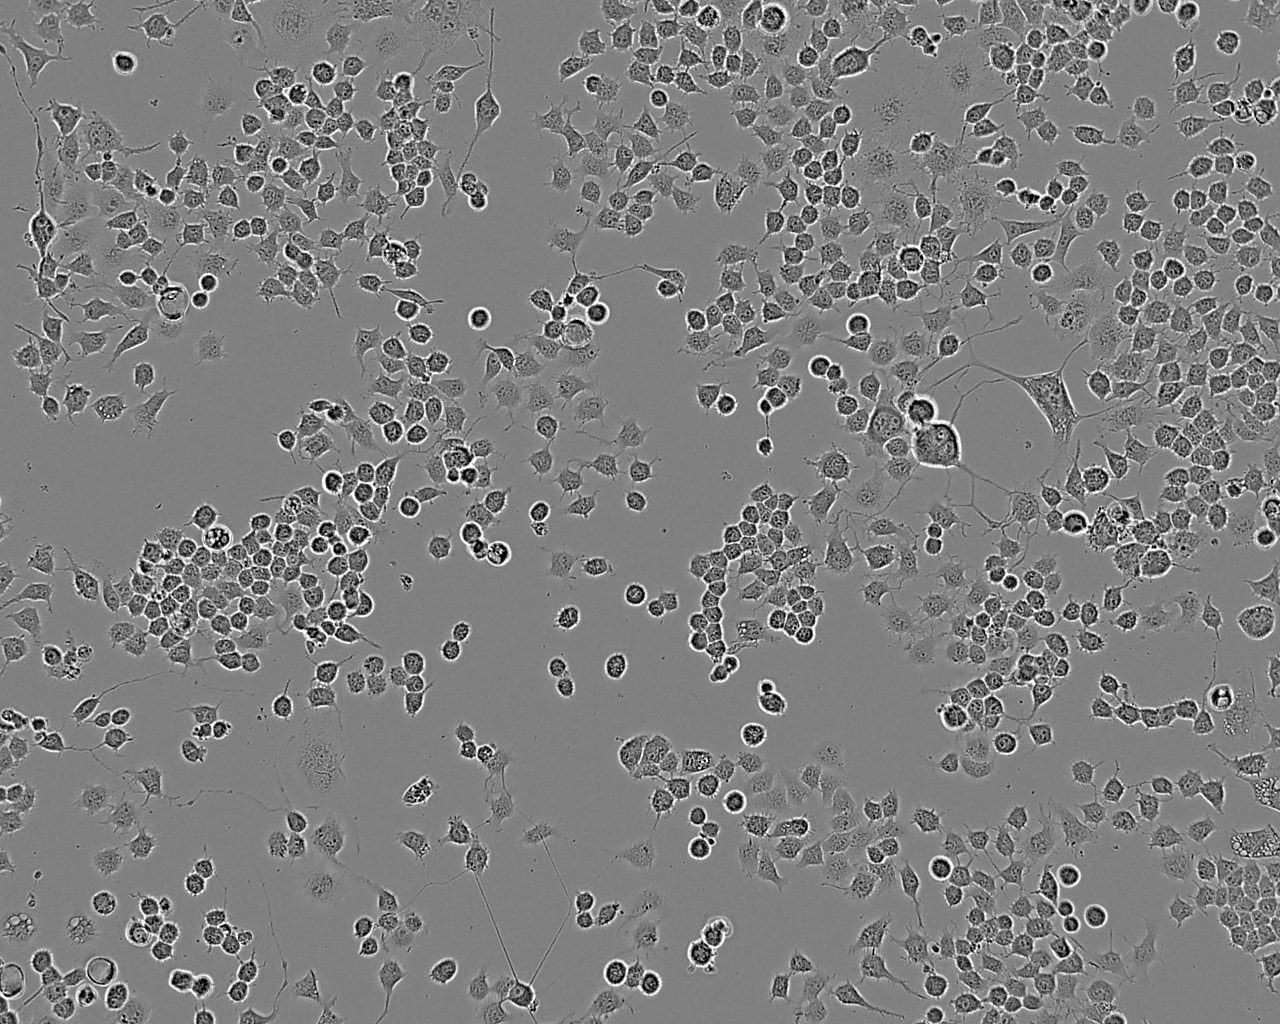 TE-9 Cells|人食管癌细胞系,TE-9 Cells